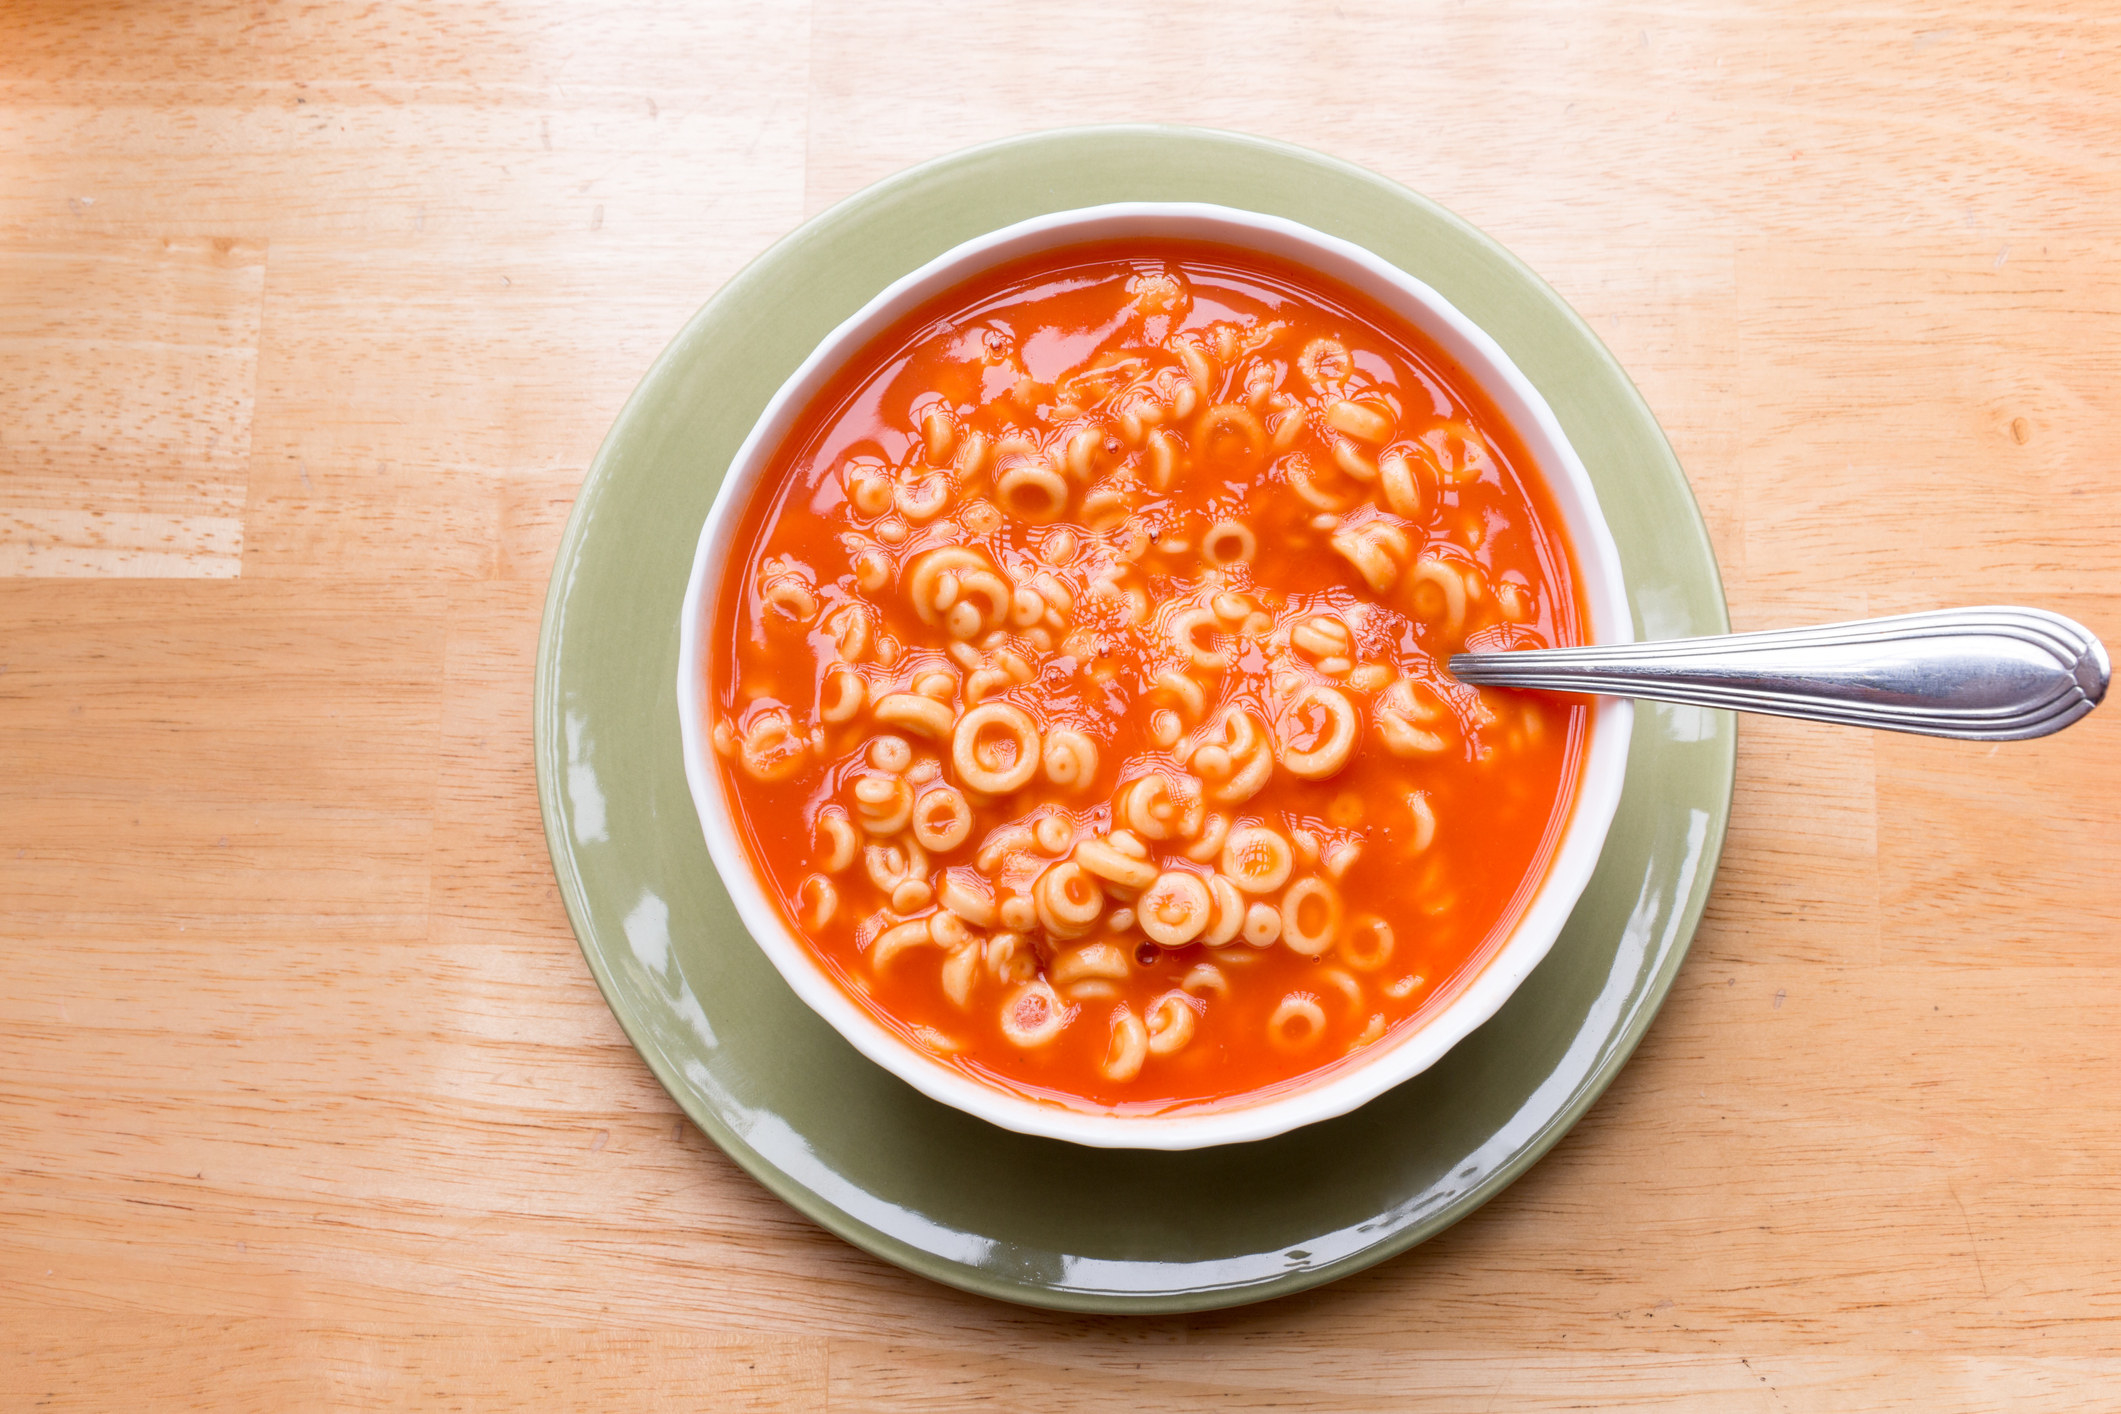 A bowl of Spaghettio&#x27;s.